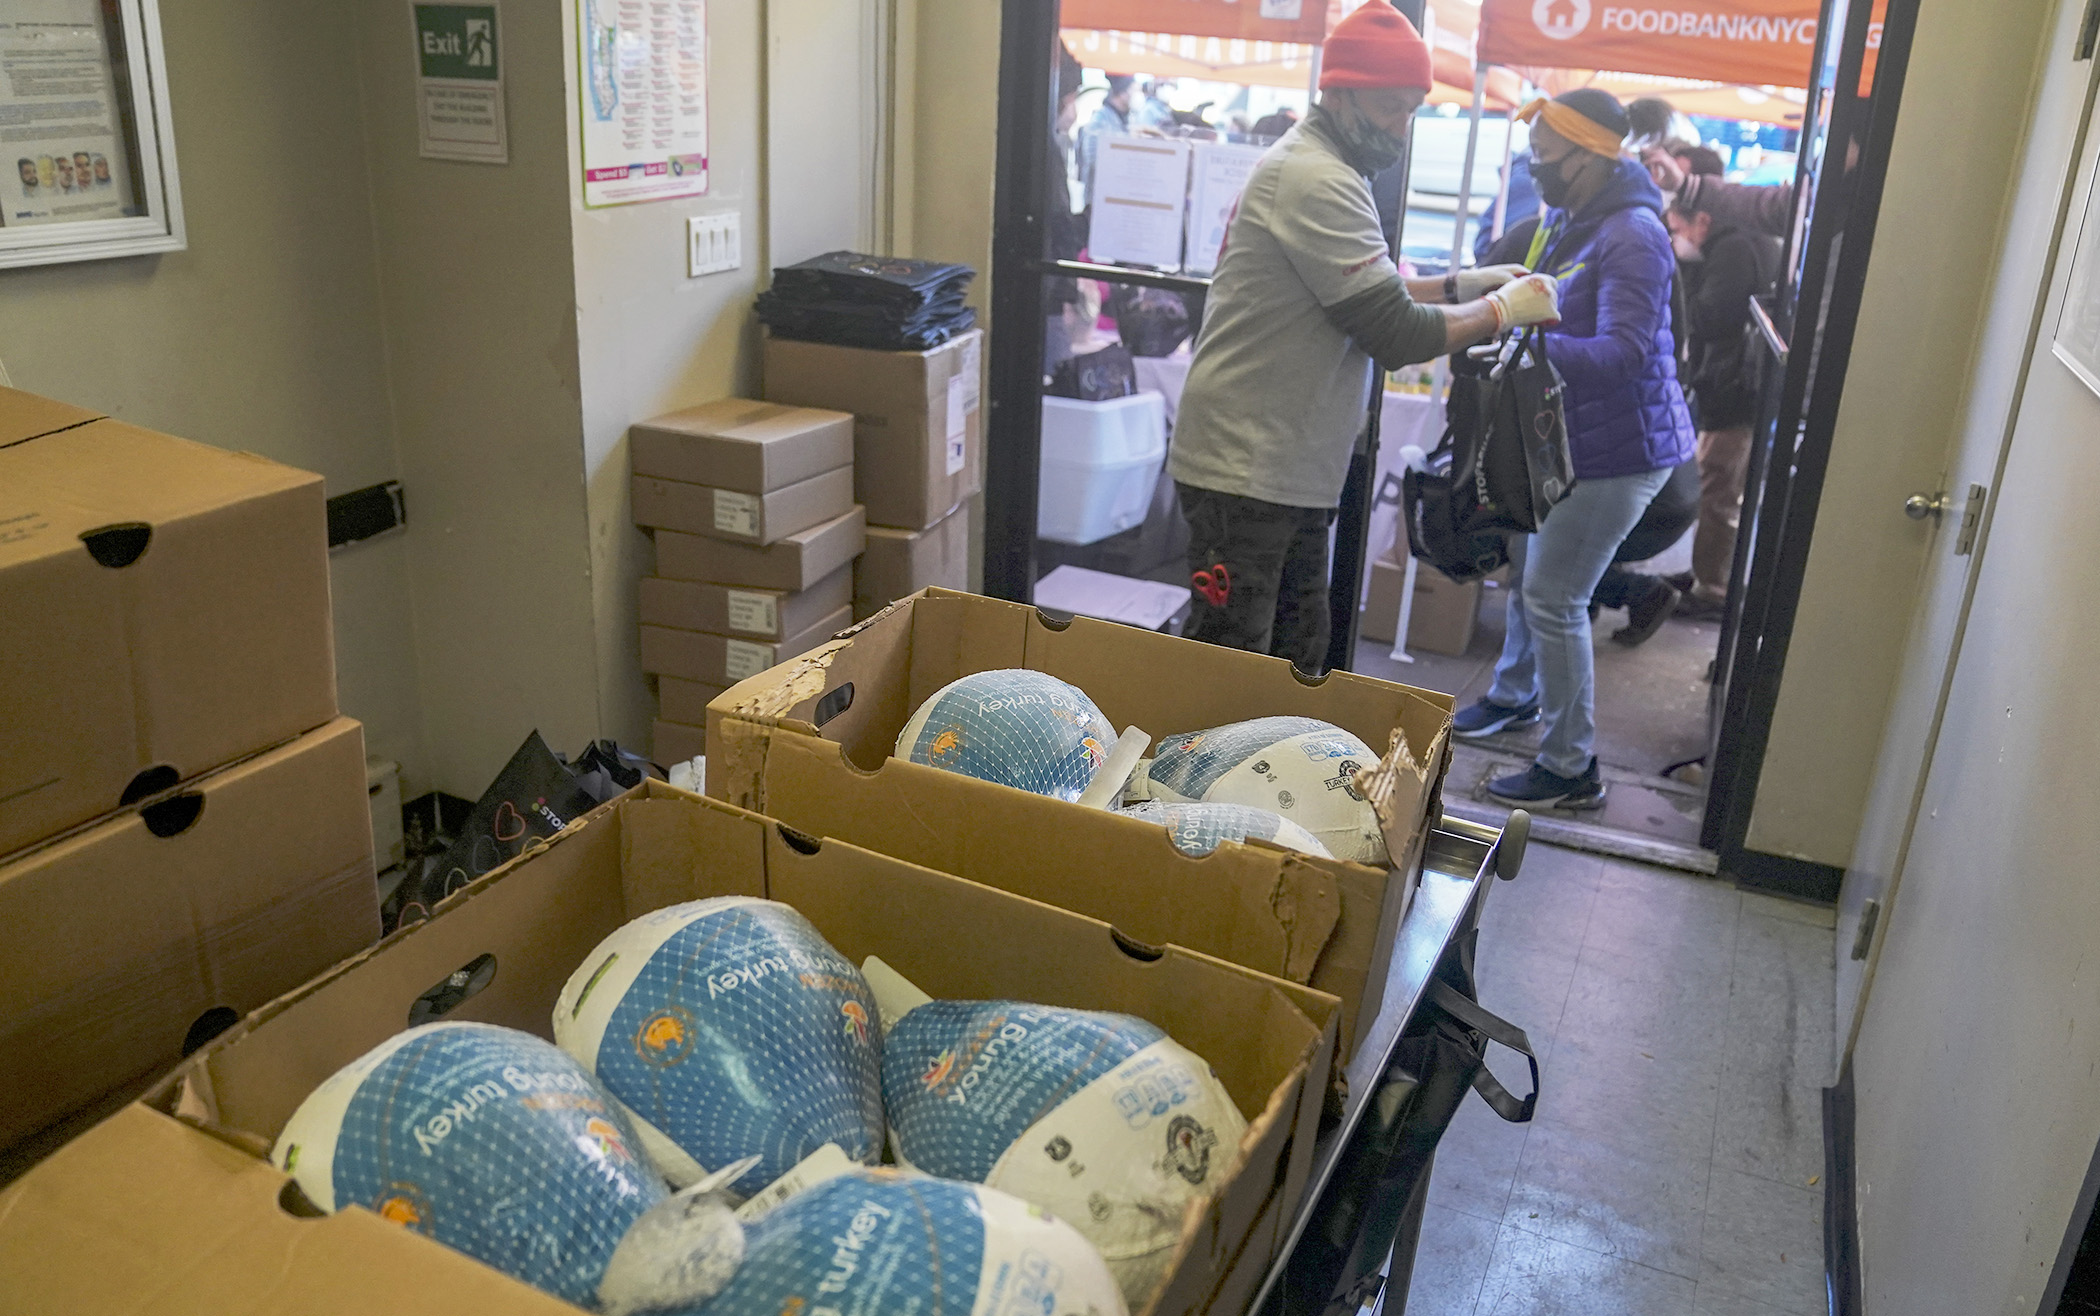 PHOTO:Volunteer Sean Armstrong, left, hands off bagged give away turkeys to volunteer Nina Norwood at Harlem's Food Bank For New York City, Nov. 16, 2020.